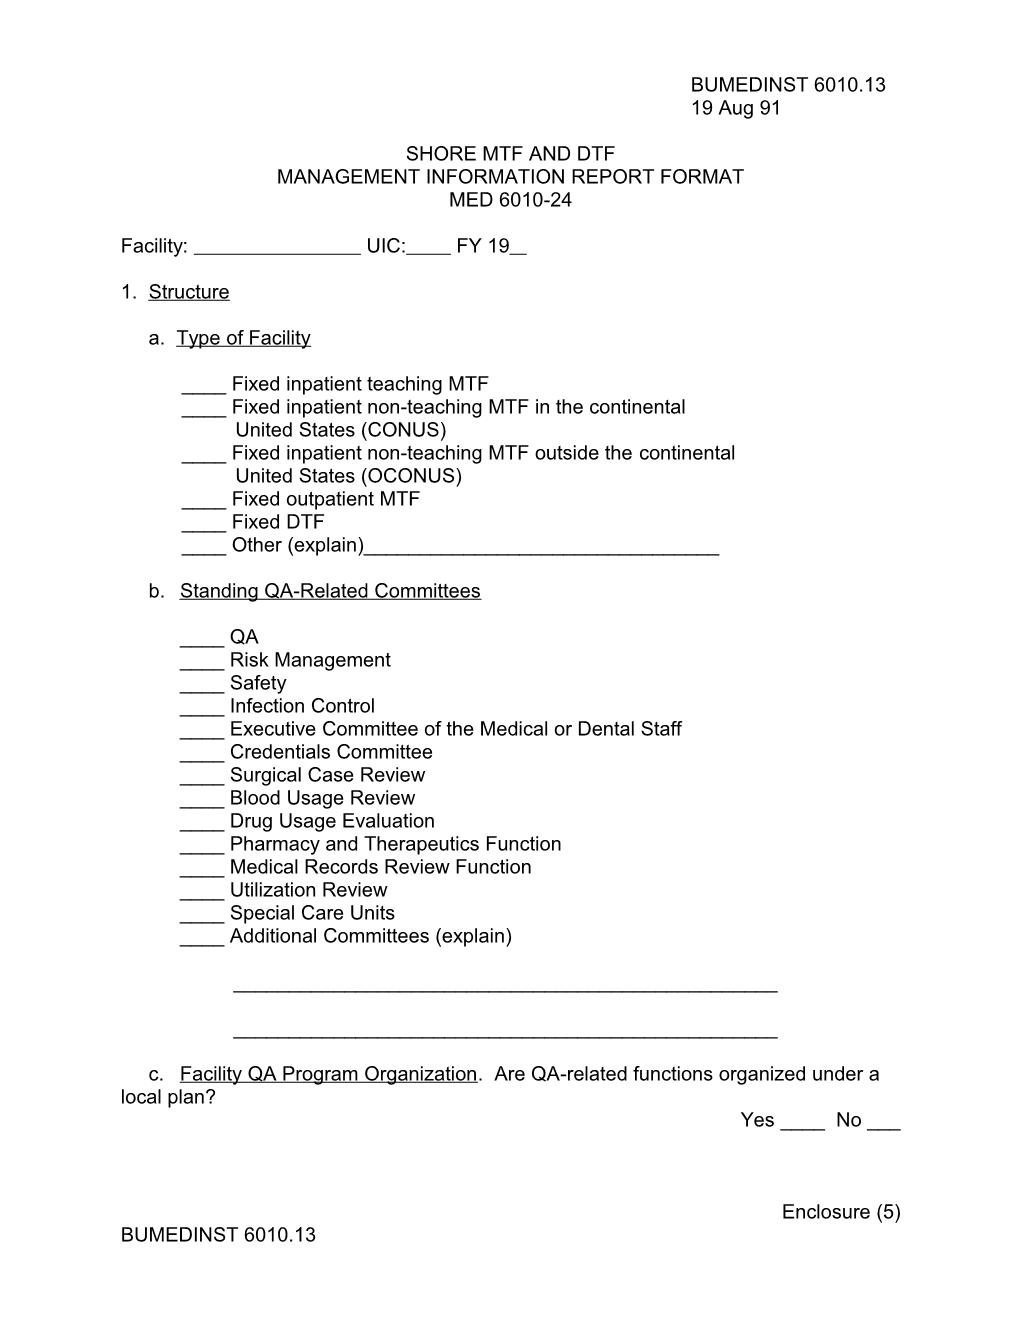 Shore Mtf and Dtf Management Information Report Format, Med 6010-24